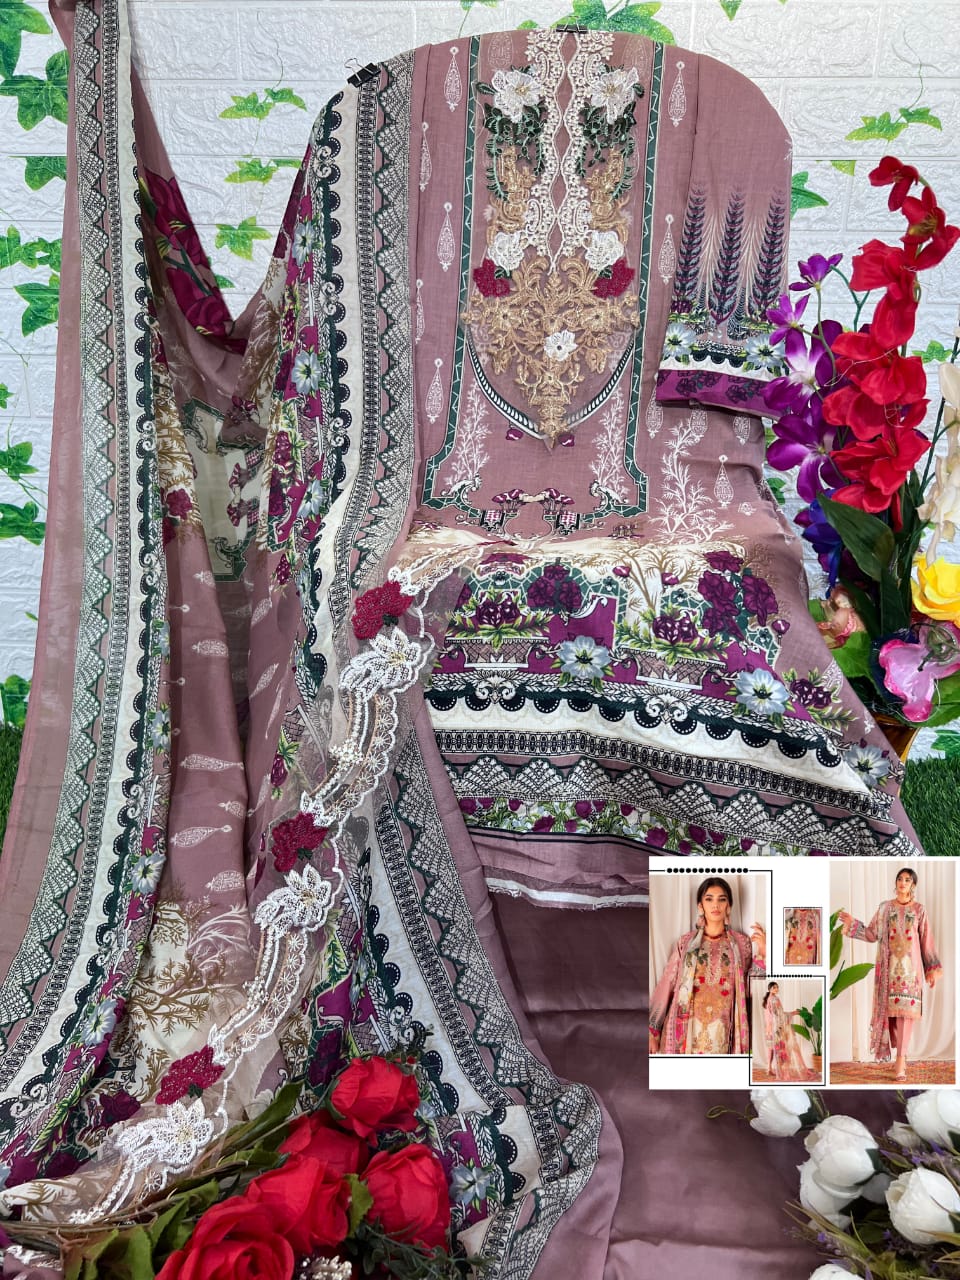 aasha designer Ayazal Vol 1 cotton exclusive print salwar suit cotton dupatta catalog